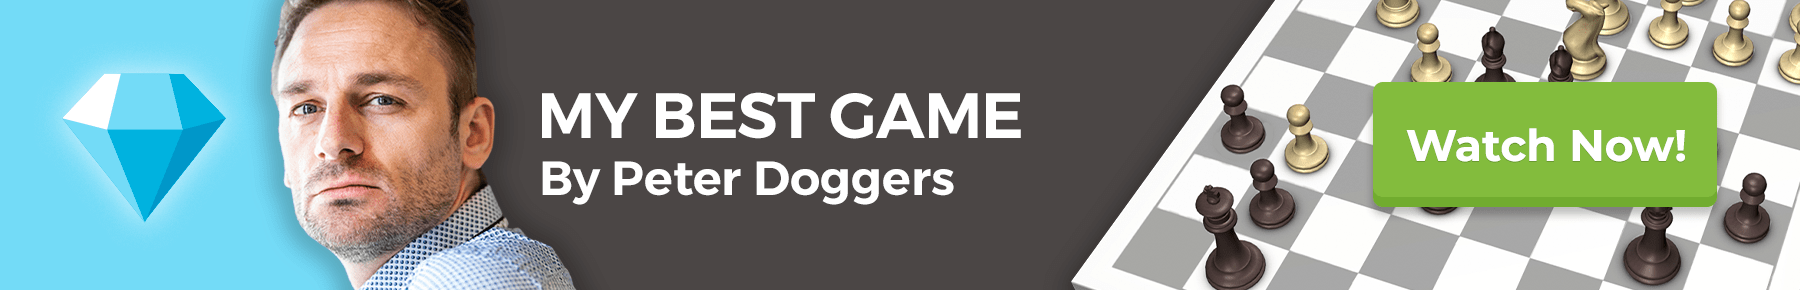 Peter Doggers : Mon meilleur jeu